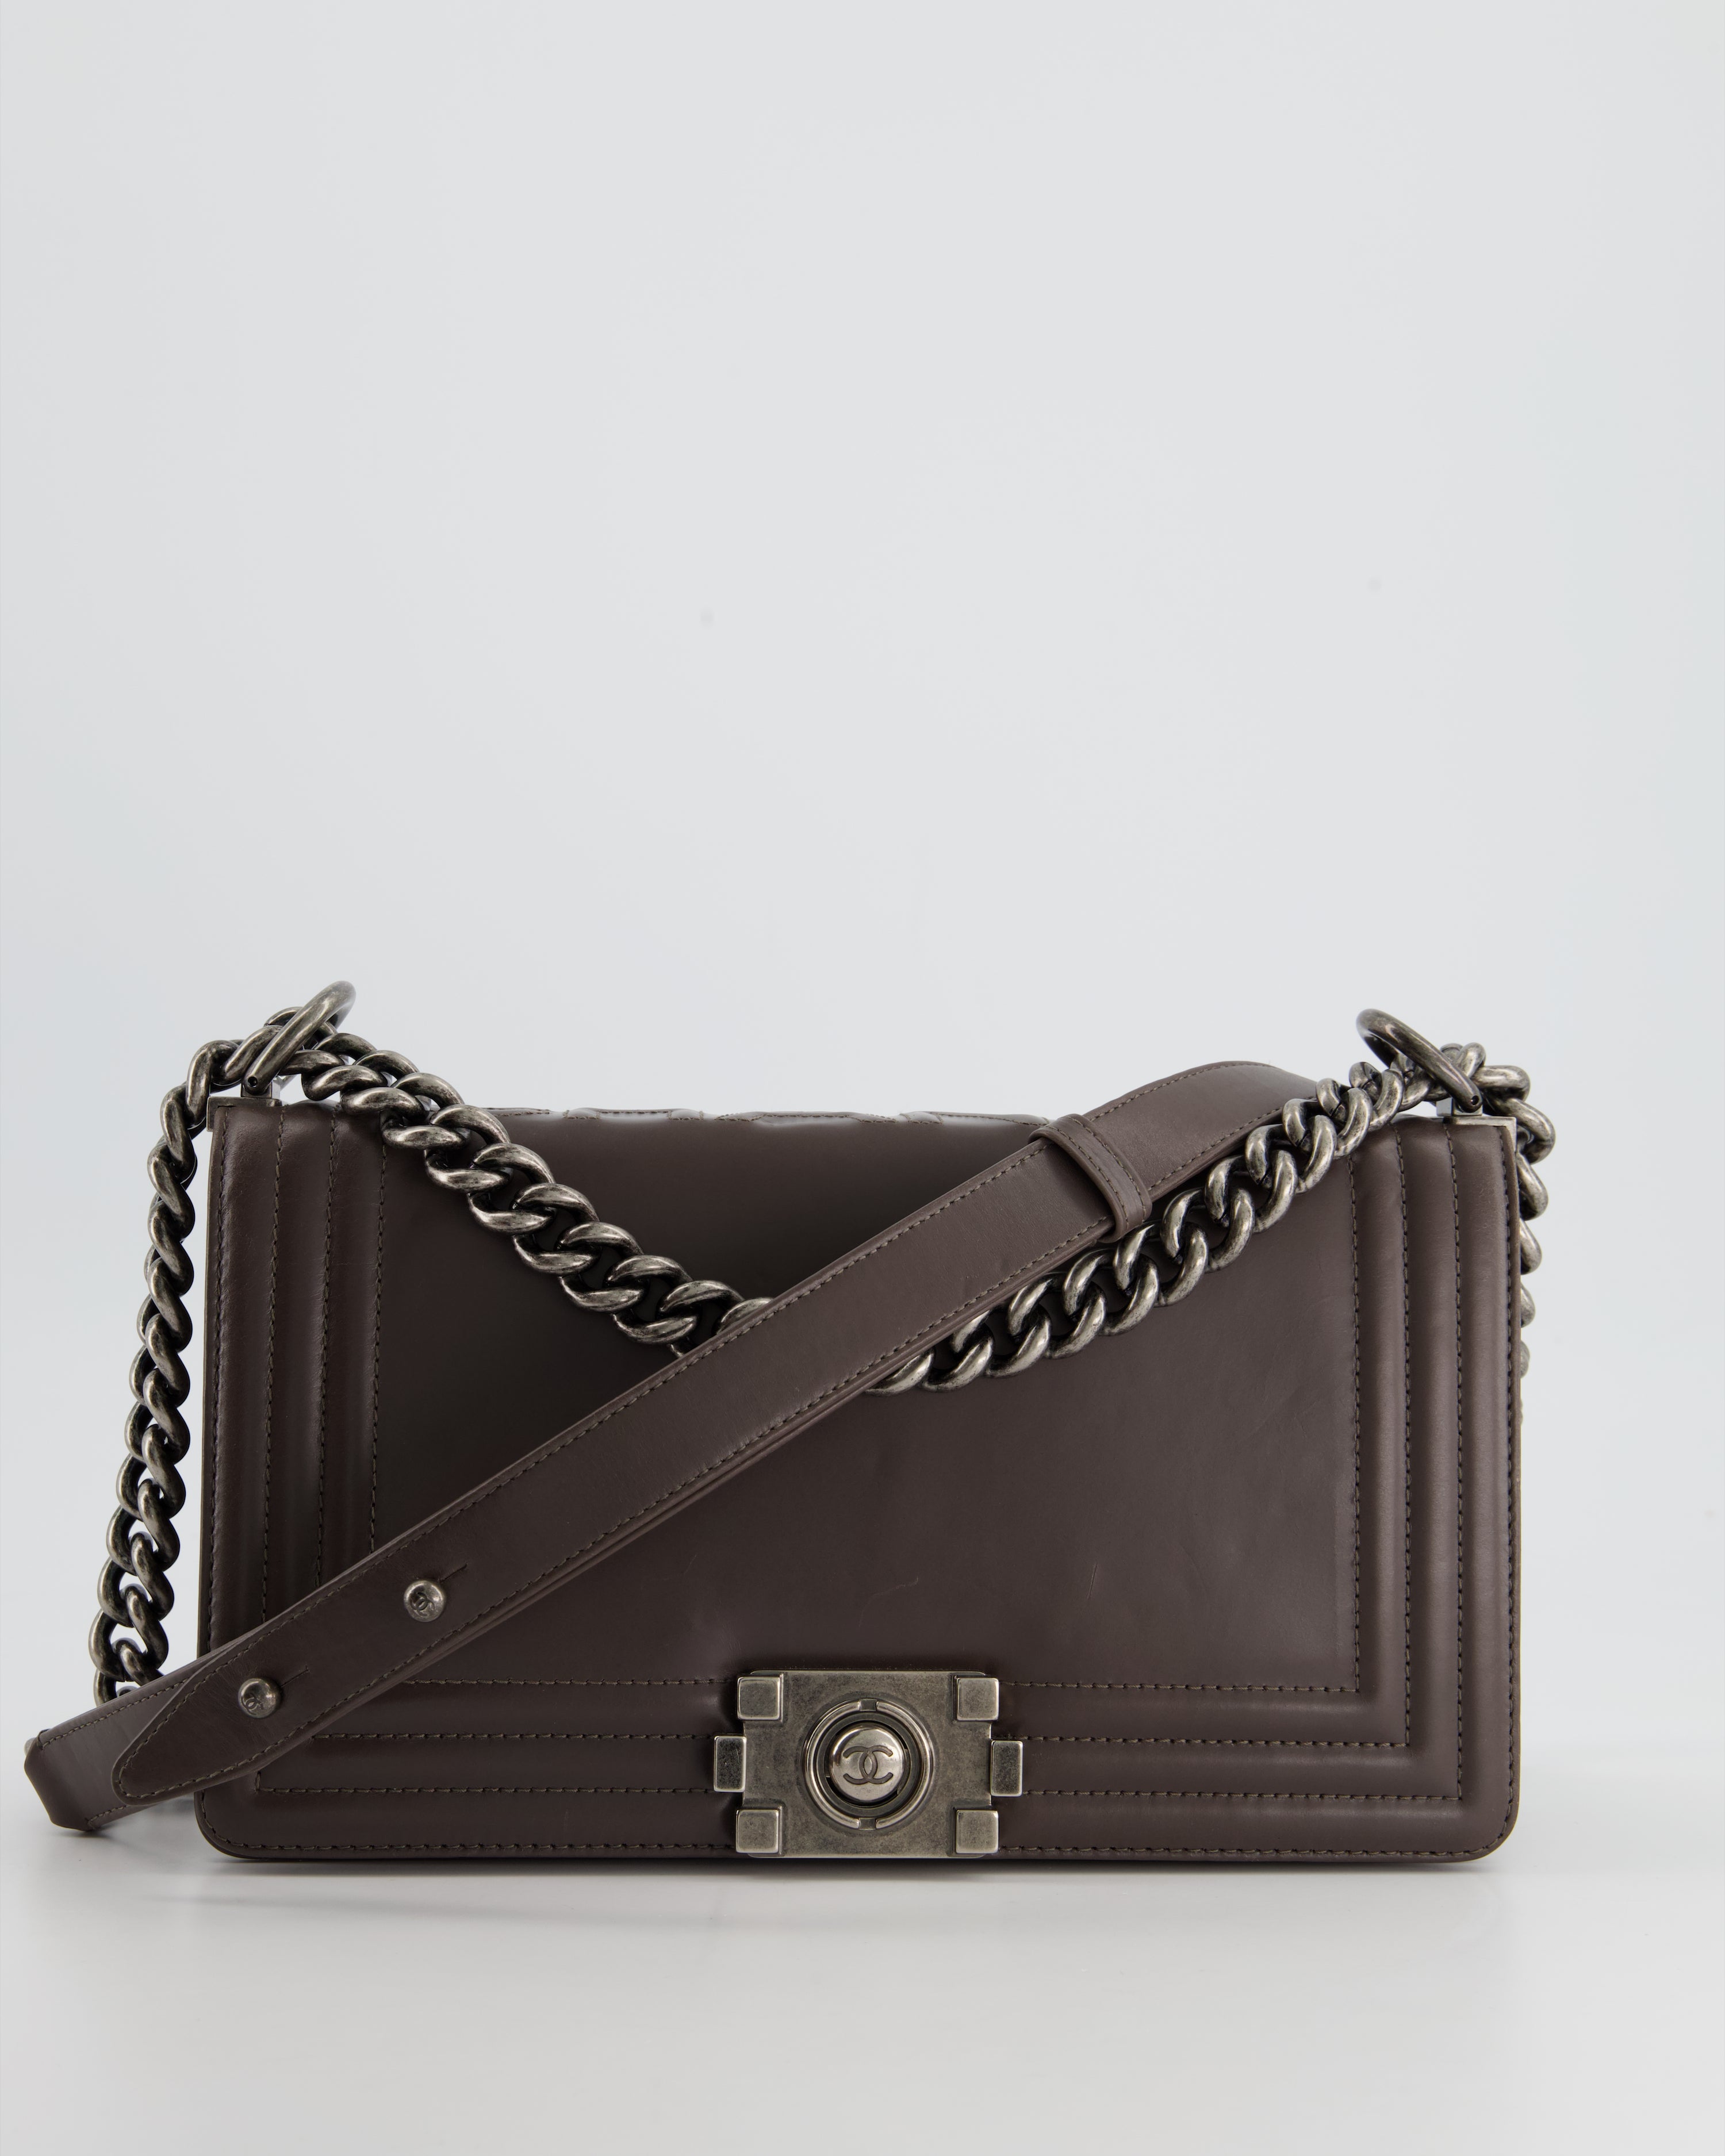 Chanel Black Lambskin New Medium Boy Bag Gold Hardware